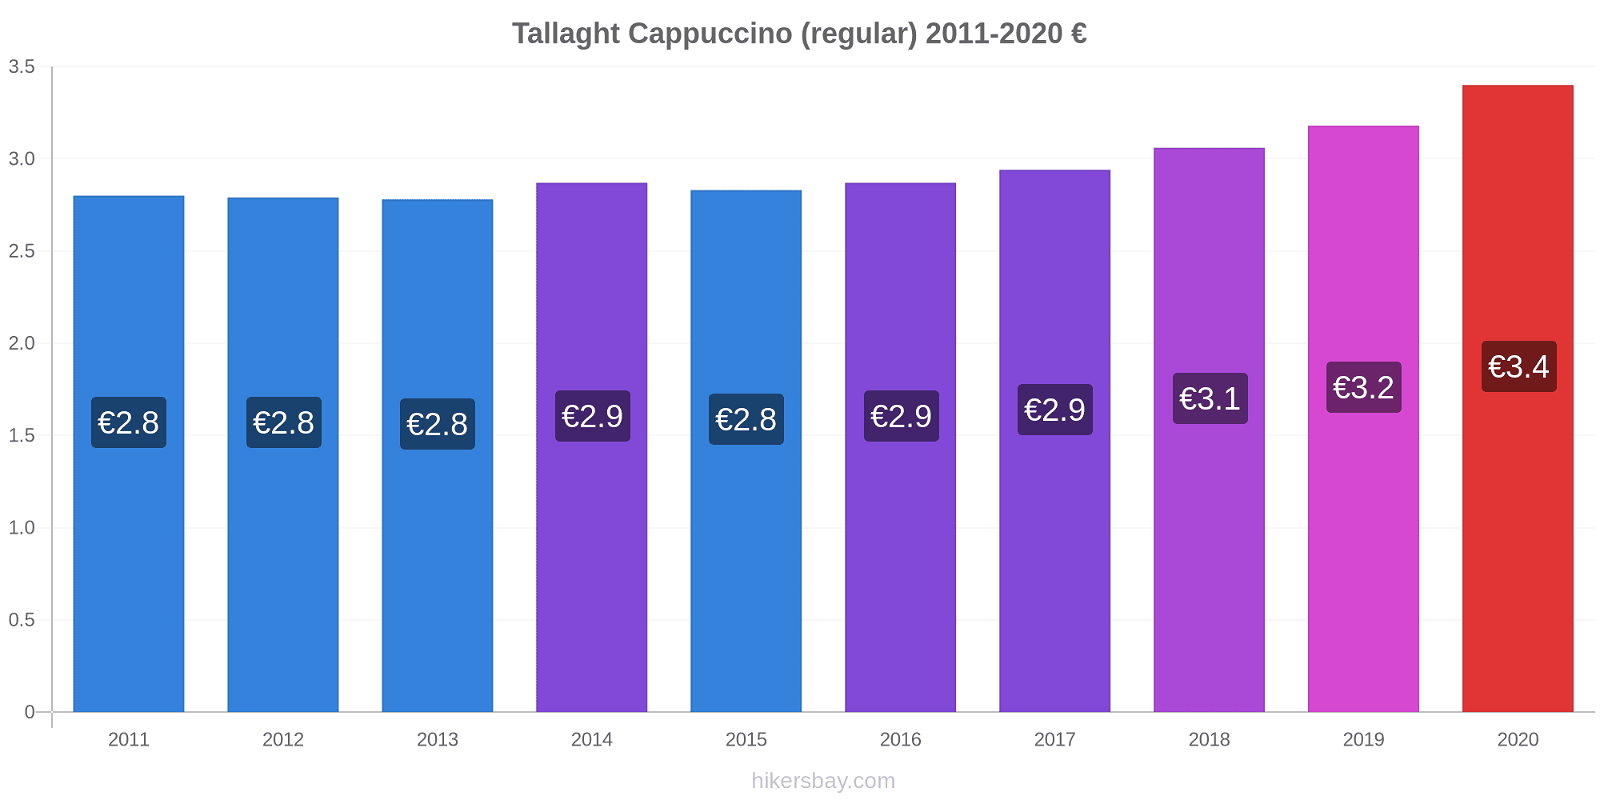 Tallaght price changes Cappuccino (regular) hikersbay.com